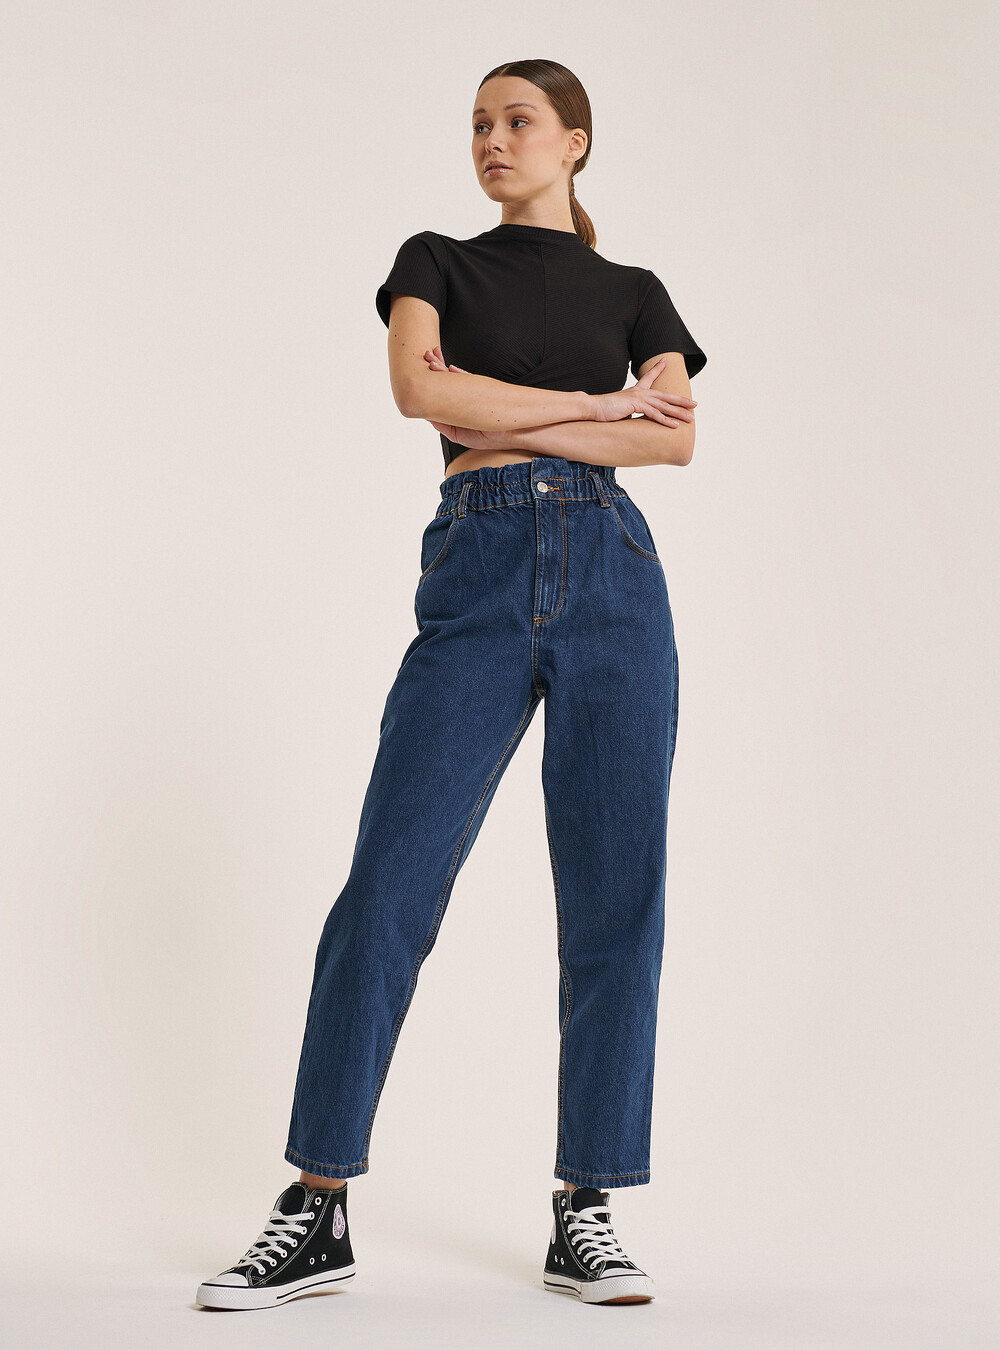 Career Nature USA Jeans slouchy fit con elastico in vita in cotone organico